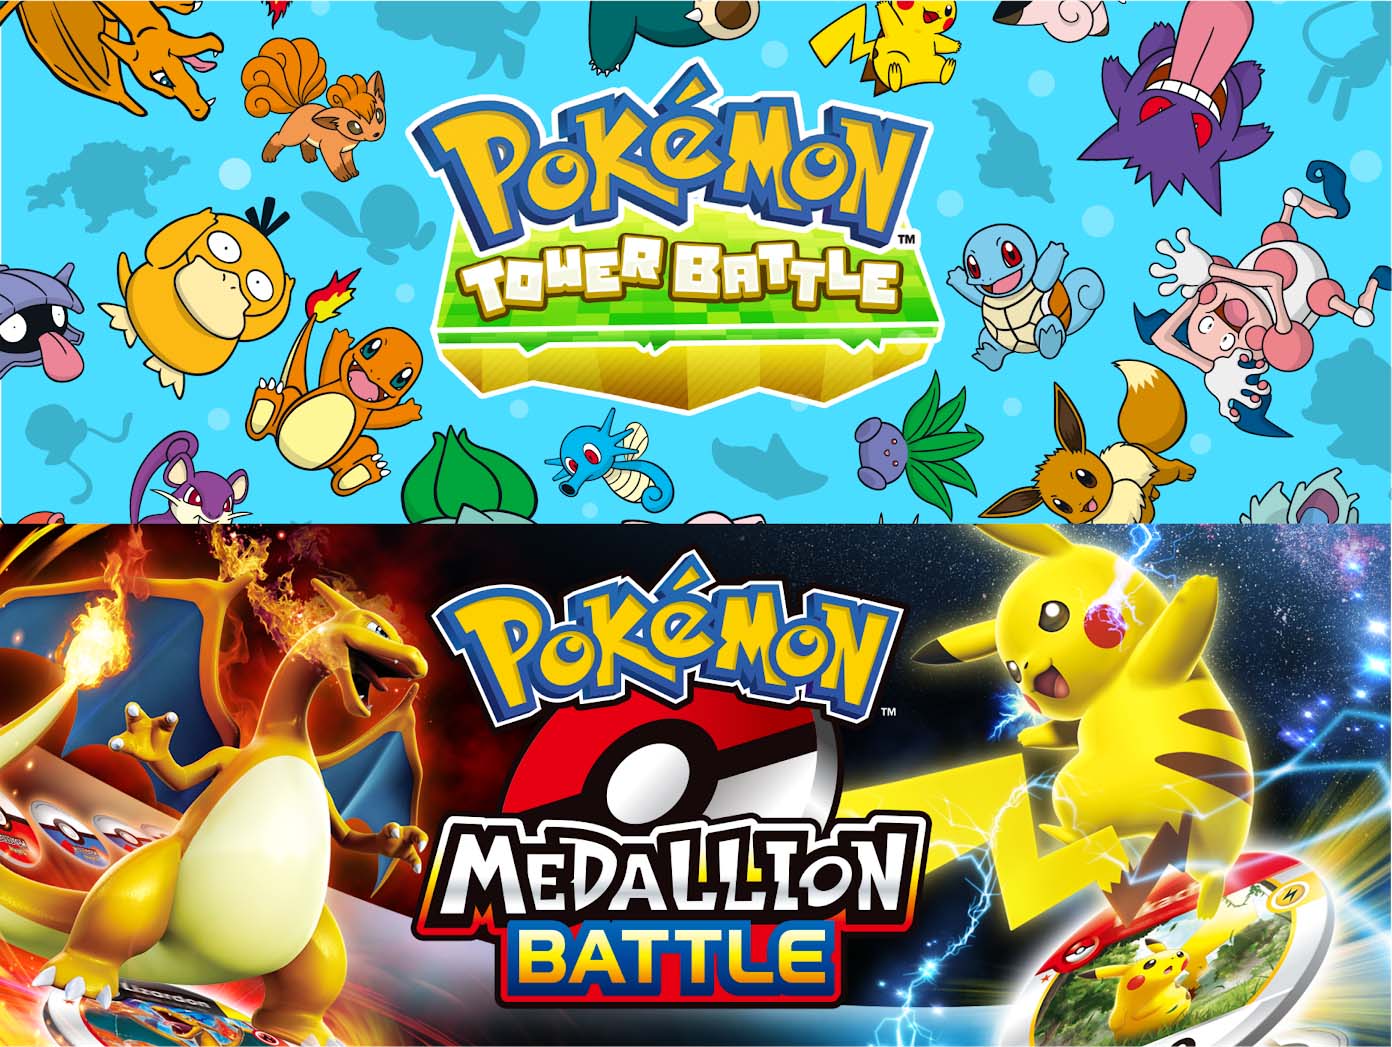 Pokemon Tower Battle Medallion Battle Debut On Facebook Pokejungle